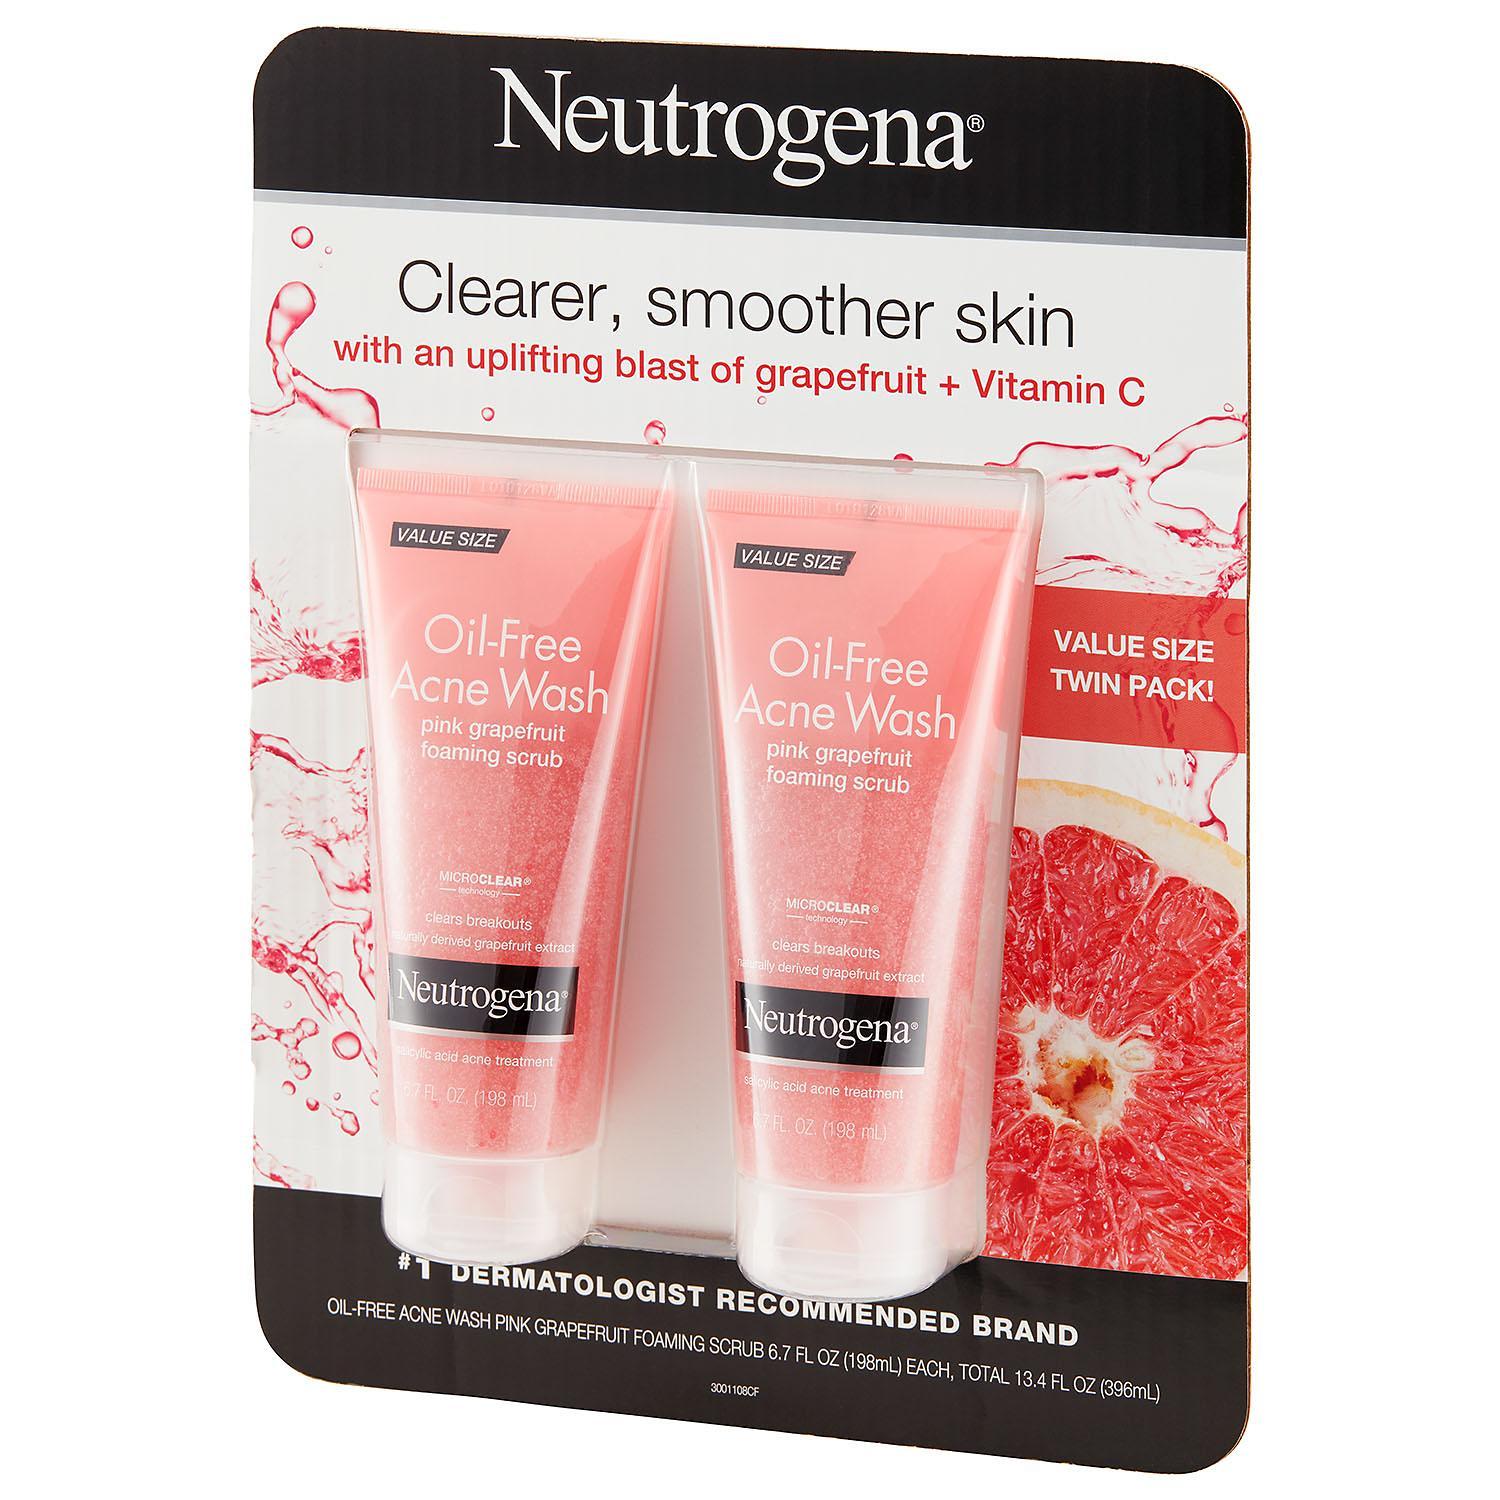 Neutrogena Oil-Free Pink Grapefruit Exfoliating Acne Face Wash and Foaming Scrub (6.7 fl. oz., 2 pk.) - image 4 of 5